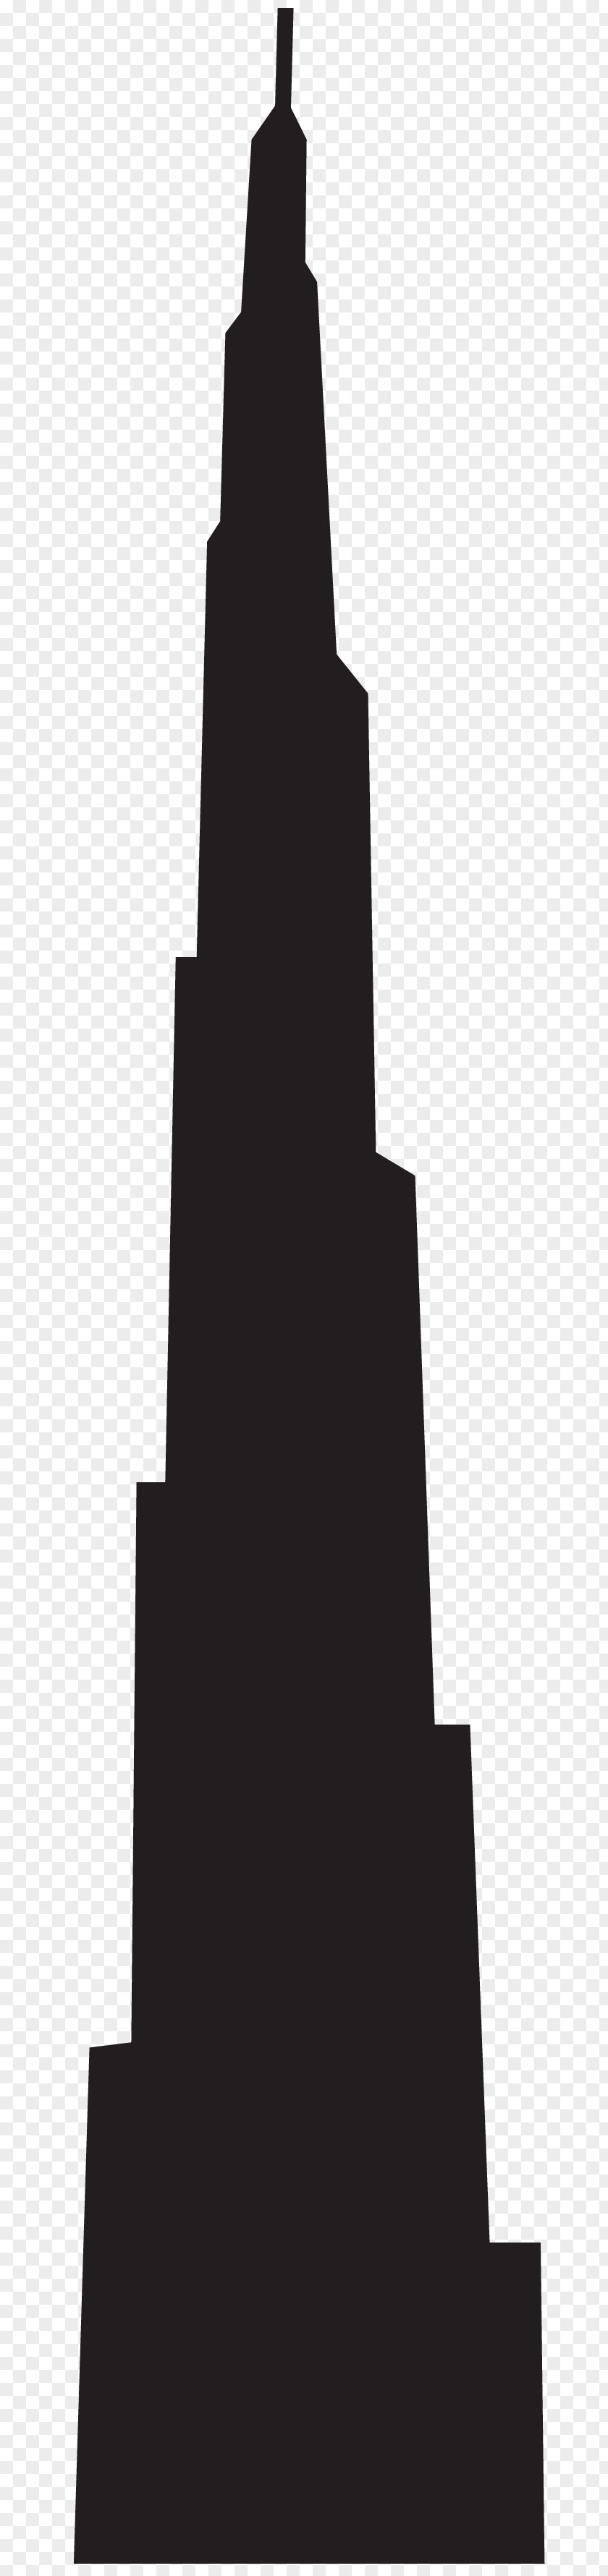 Burj Khalifa Globe Flight Silhouette Clip Art PNG